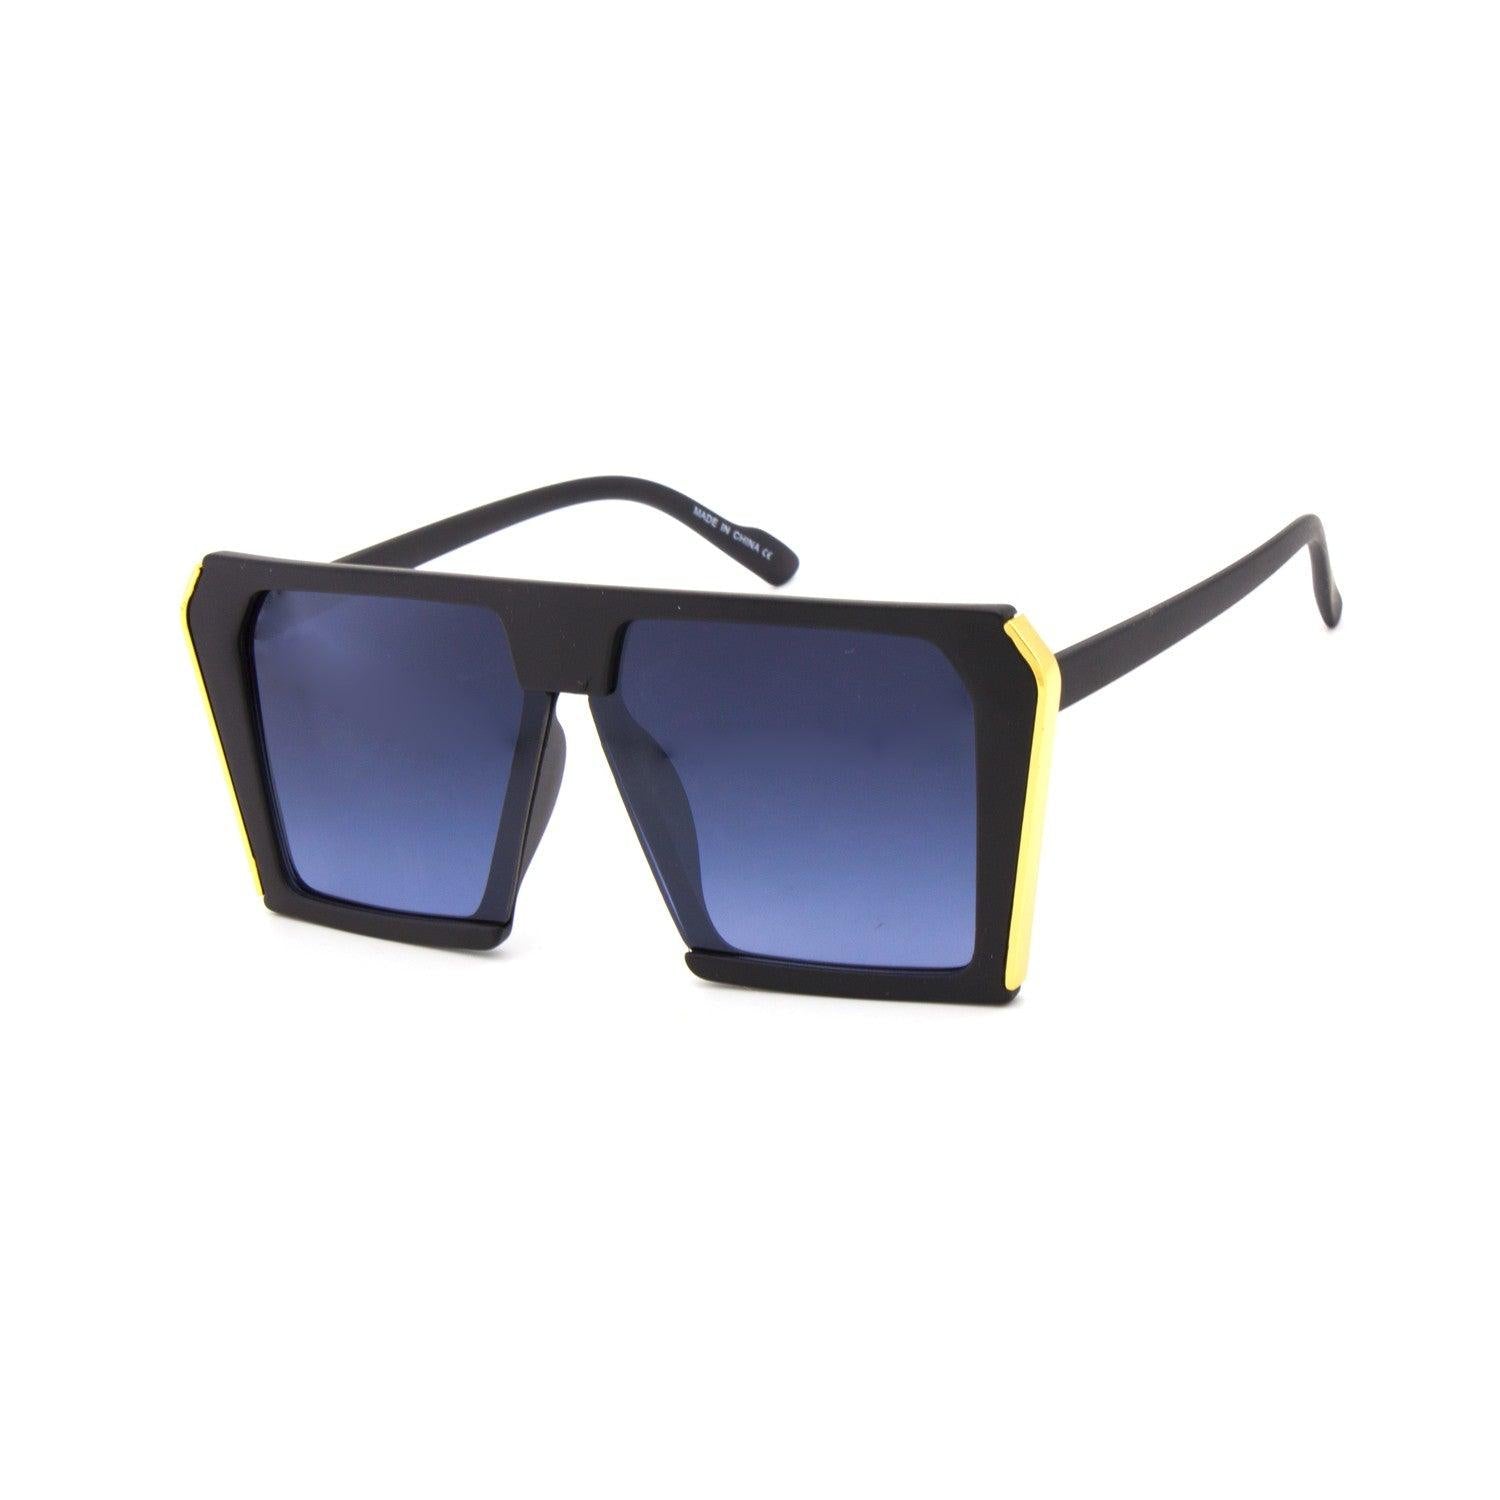 "Yasmin" Overisize Square Sunglasses - Weekend Shade Sunglasses